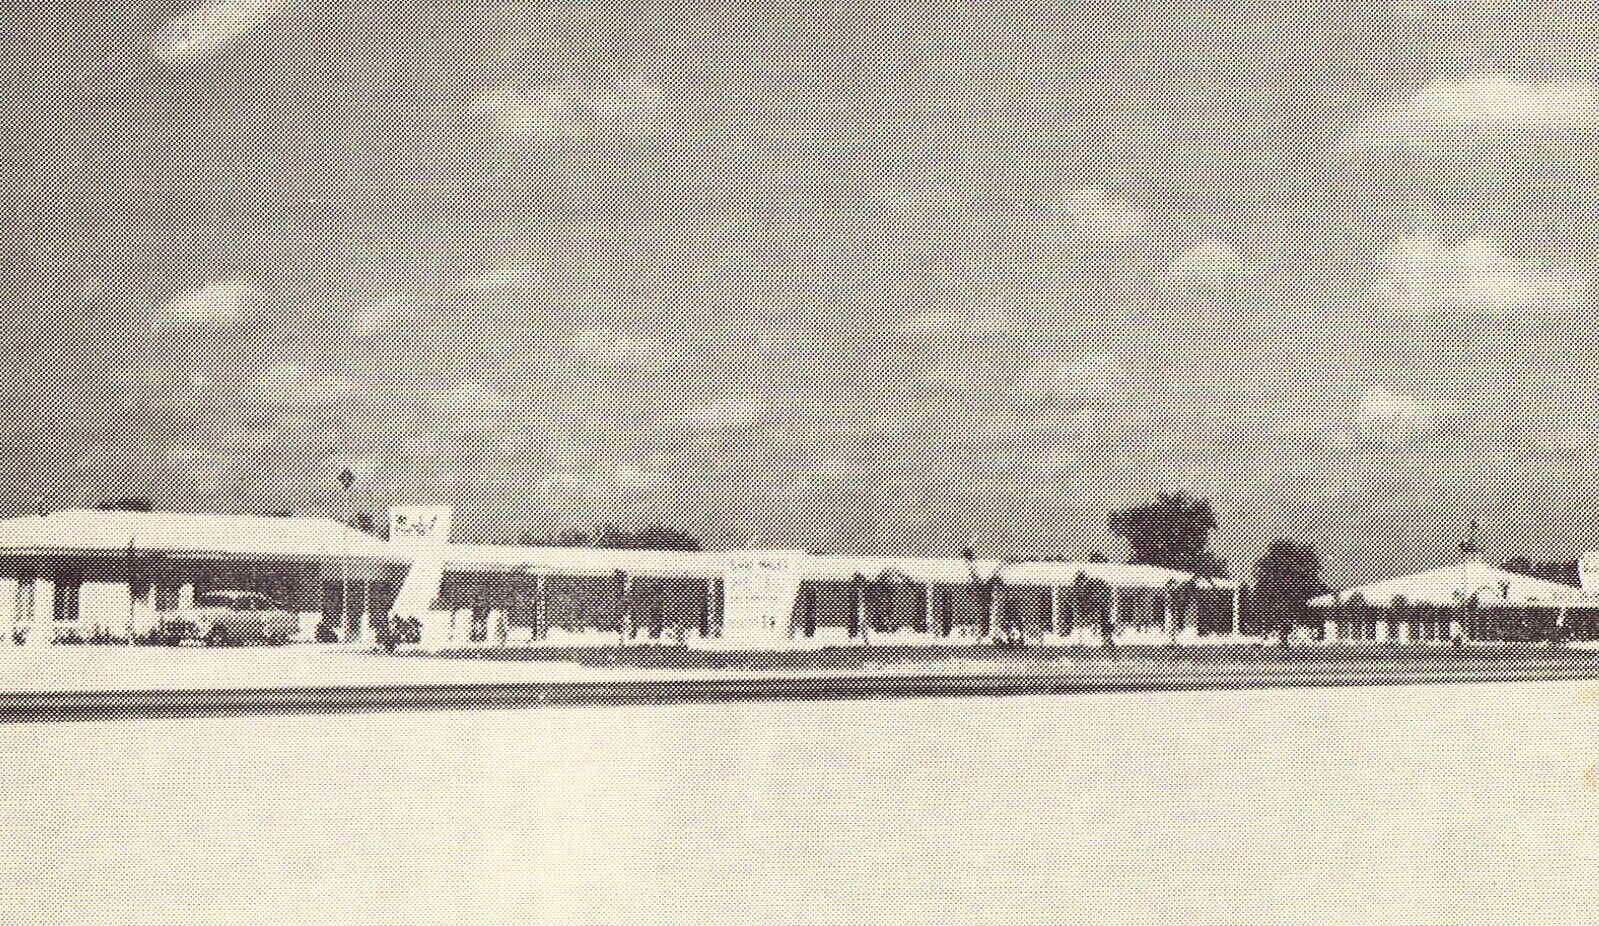 Lake Wales Motel & Restaurant - Lake Wales, Florida Vintage Postcard